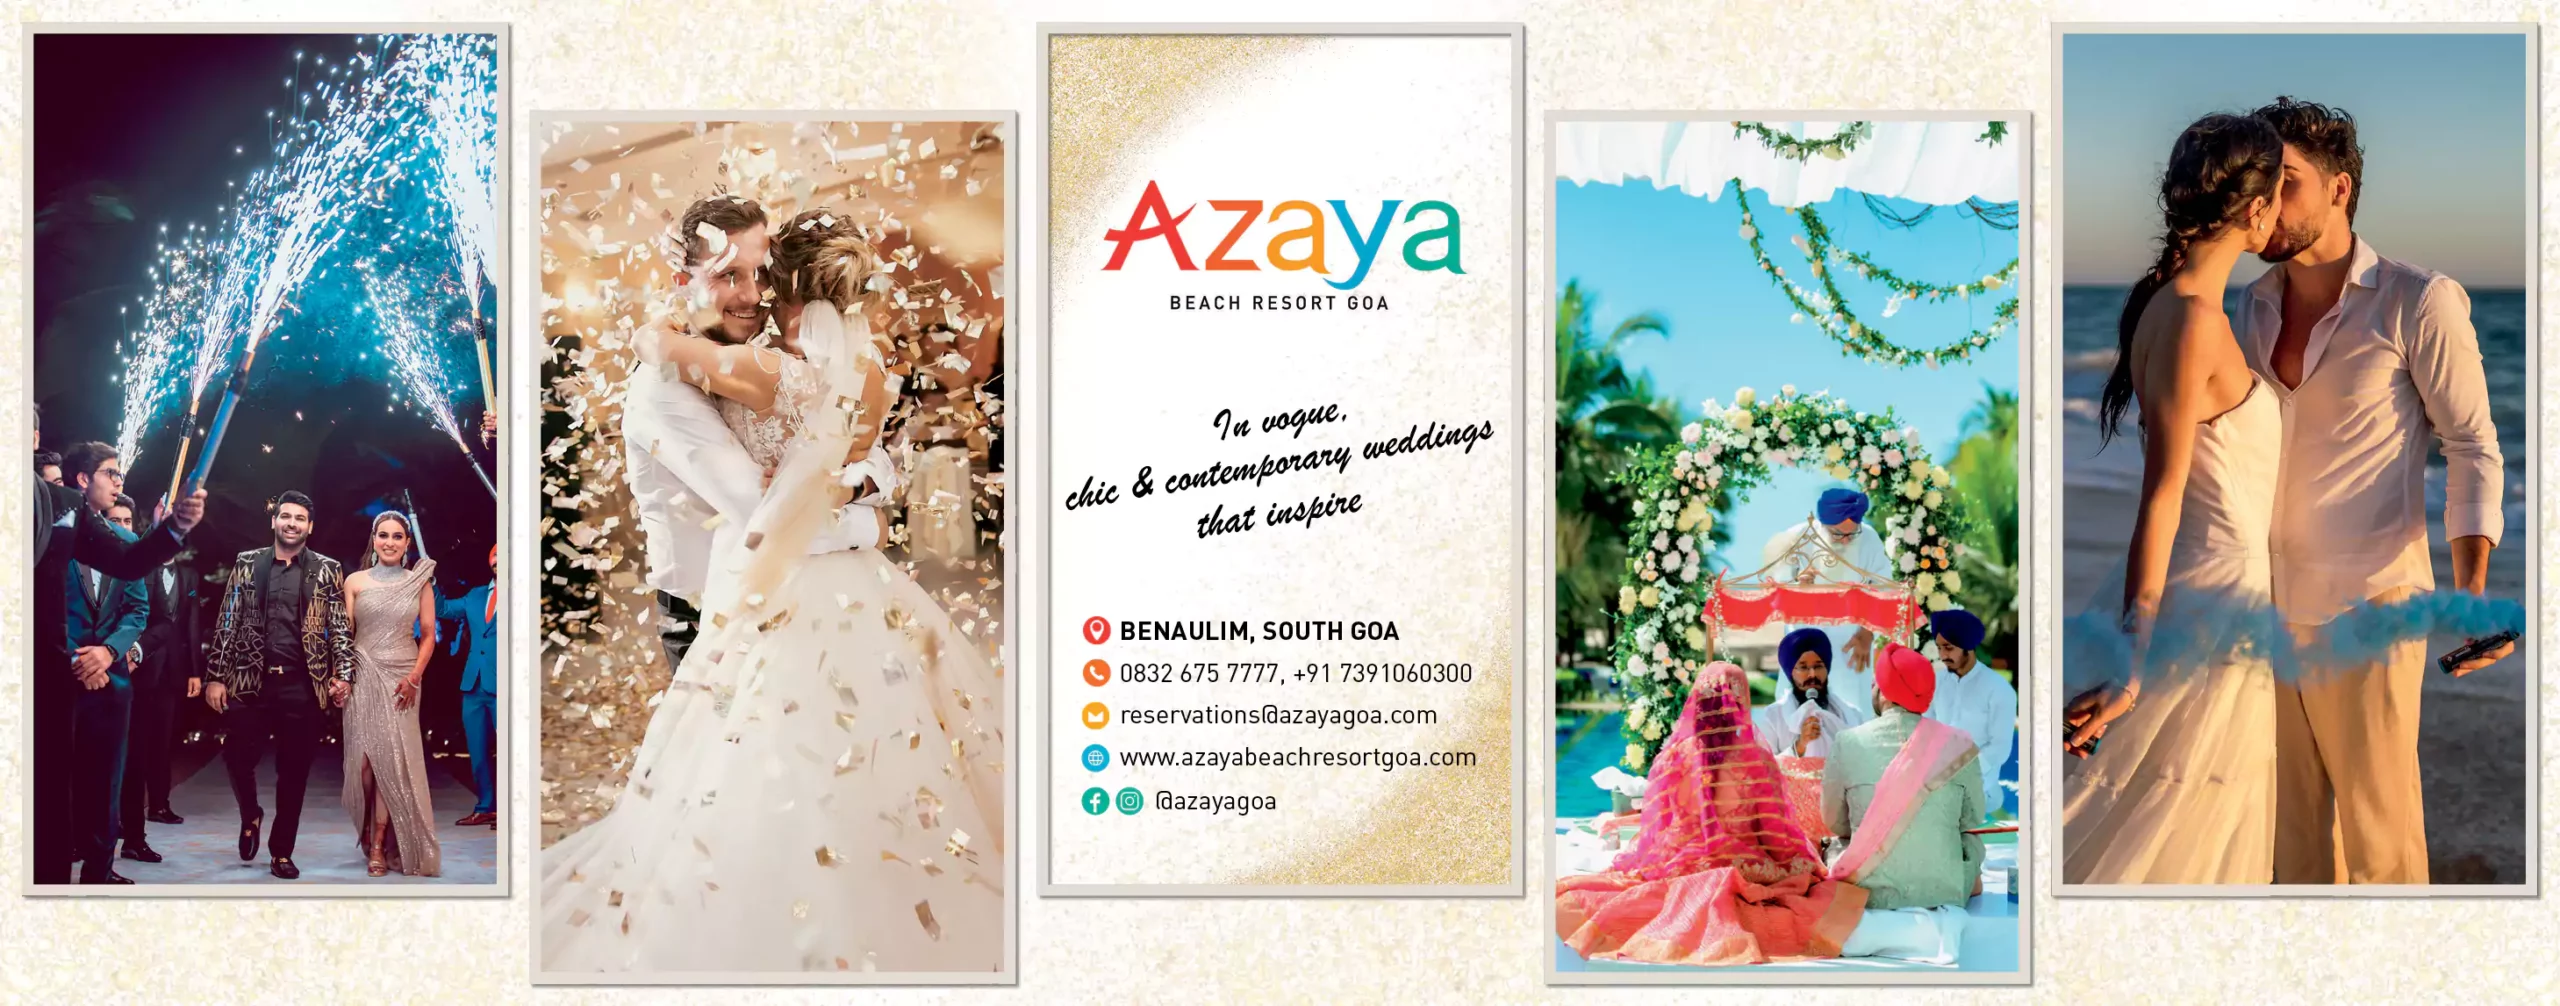 azaya-wedding-affair-instagram-landscape